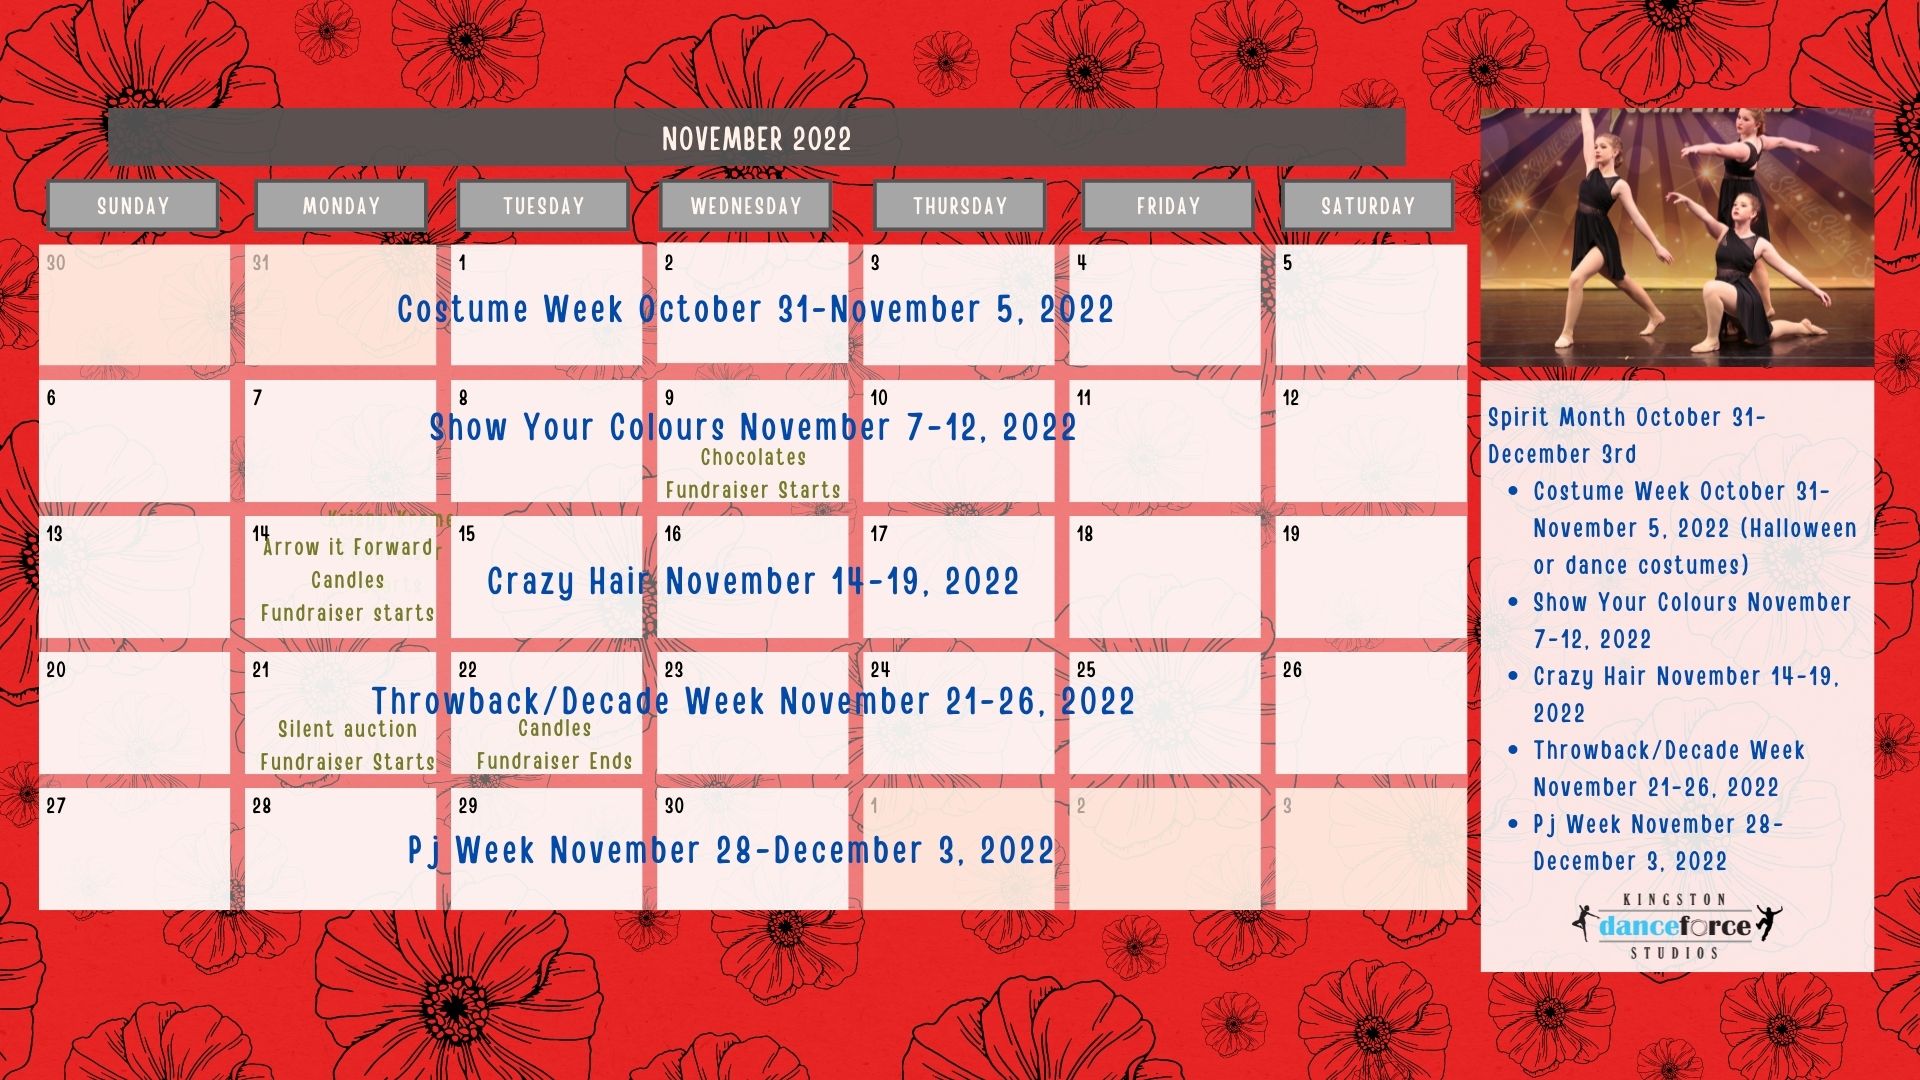 KDF At a glance calendar November 2022